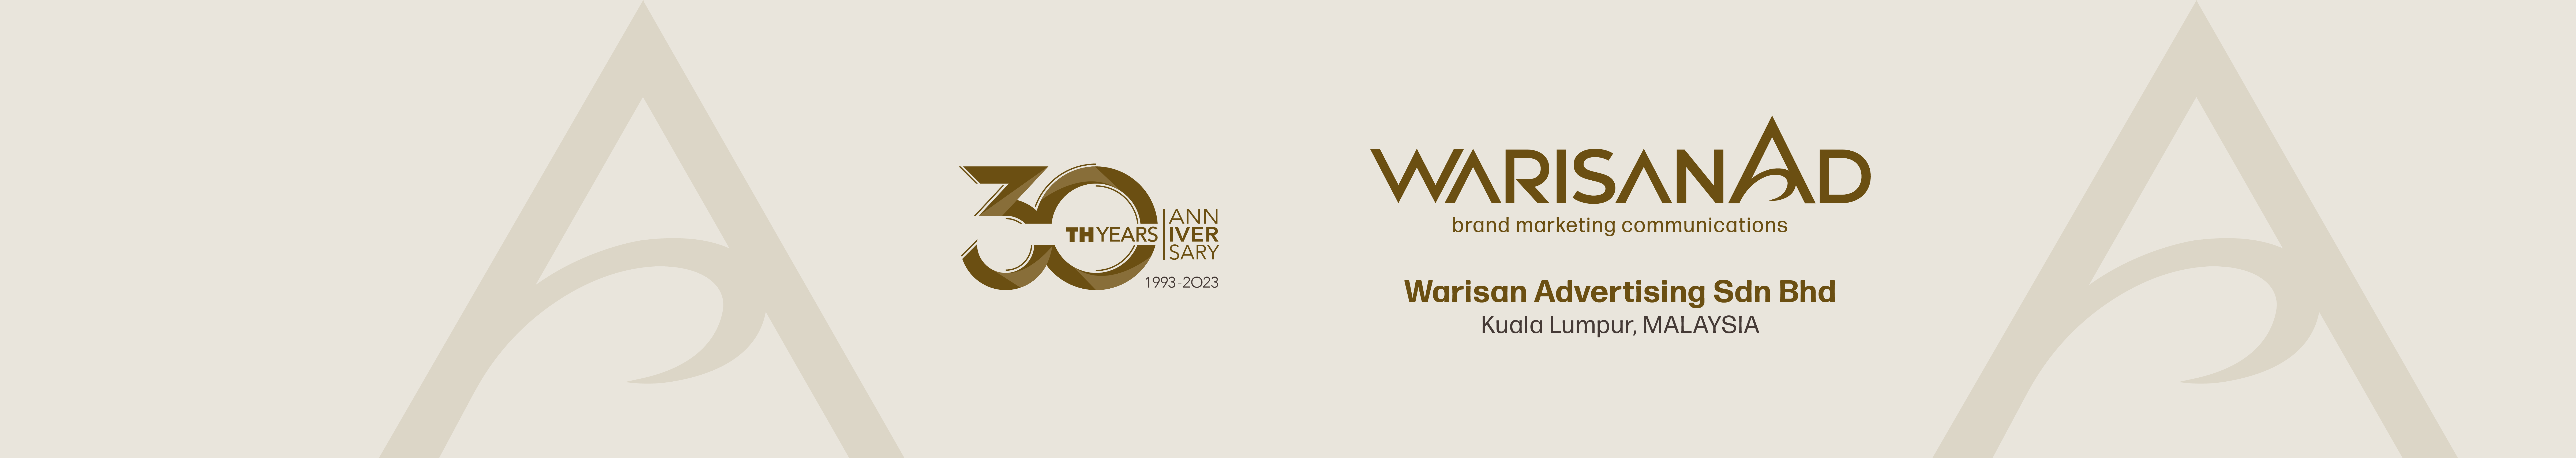 Banner de perfil de Warisan Ad